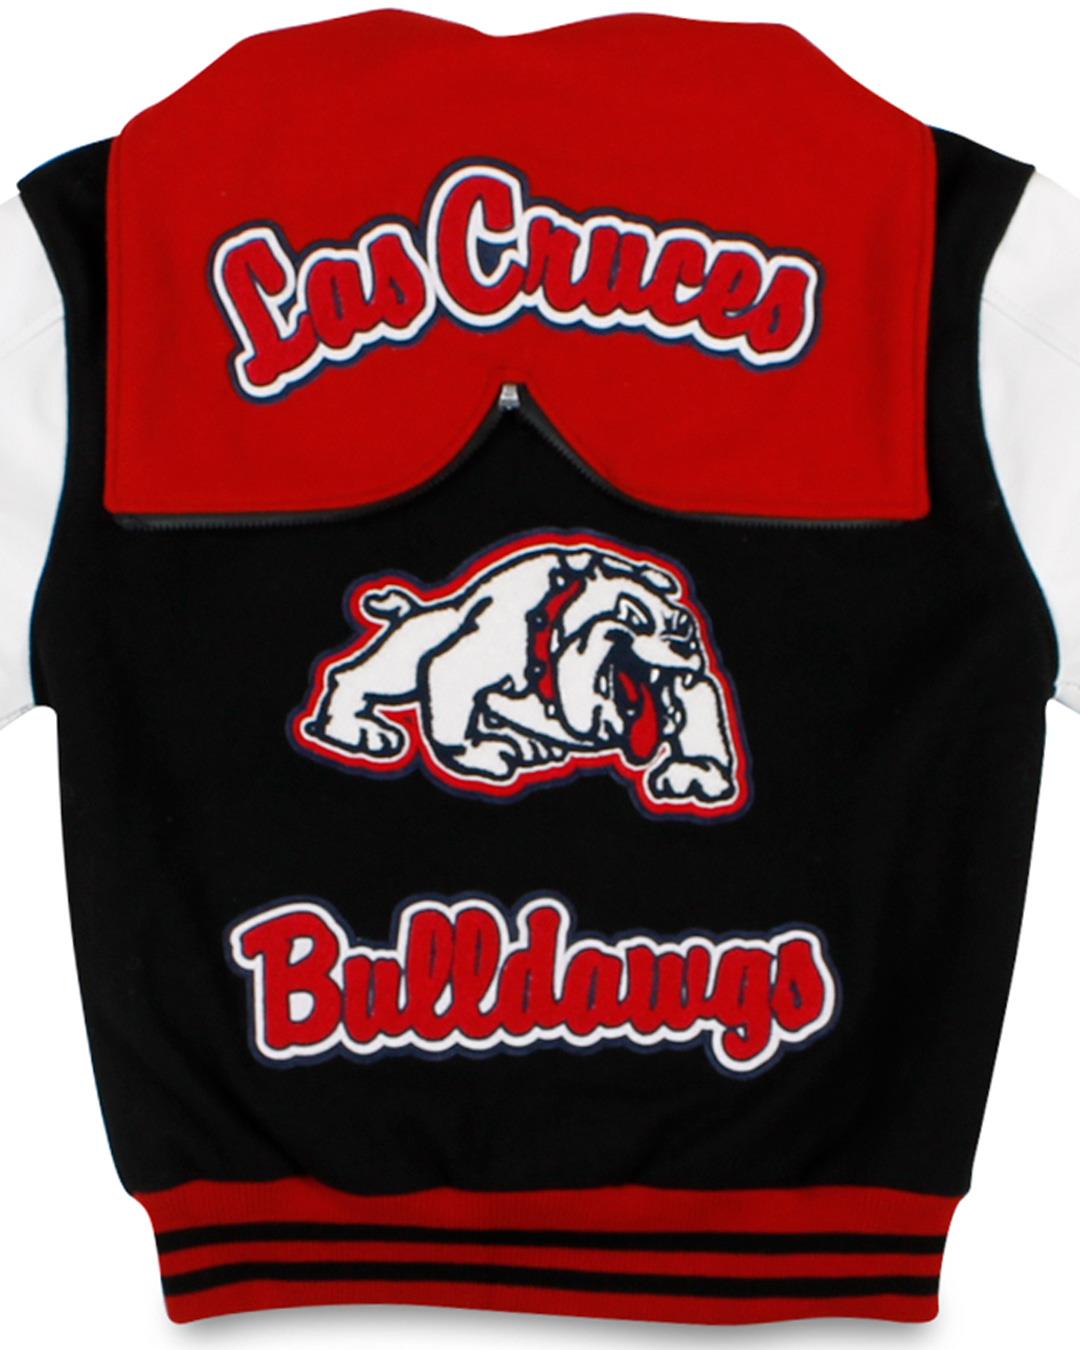 Las Cruces High School Letterman Jacket, Las Cruces NM - Back